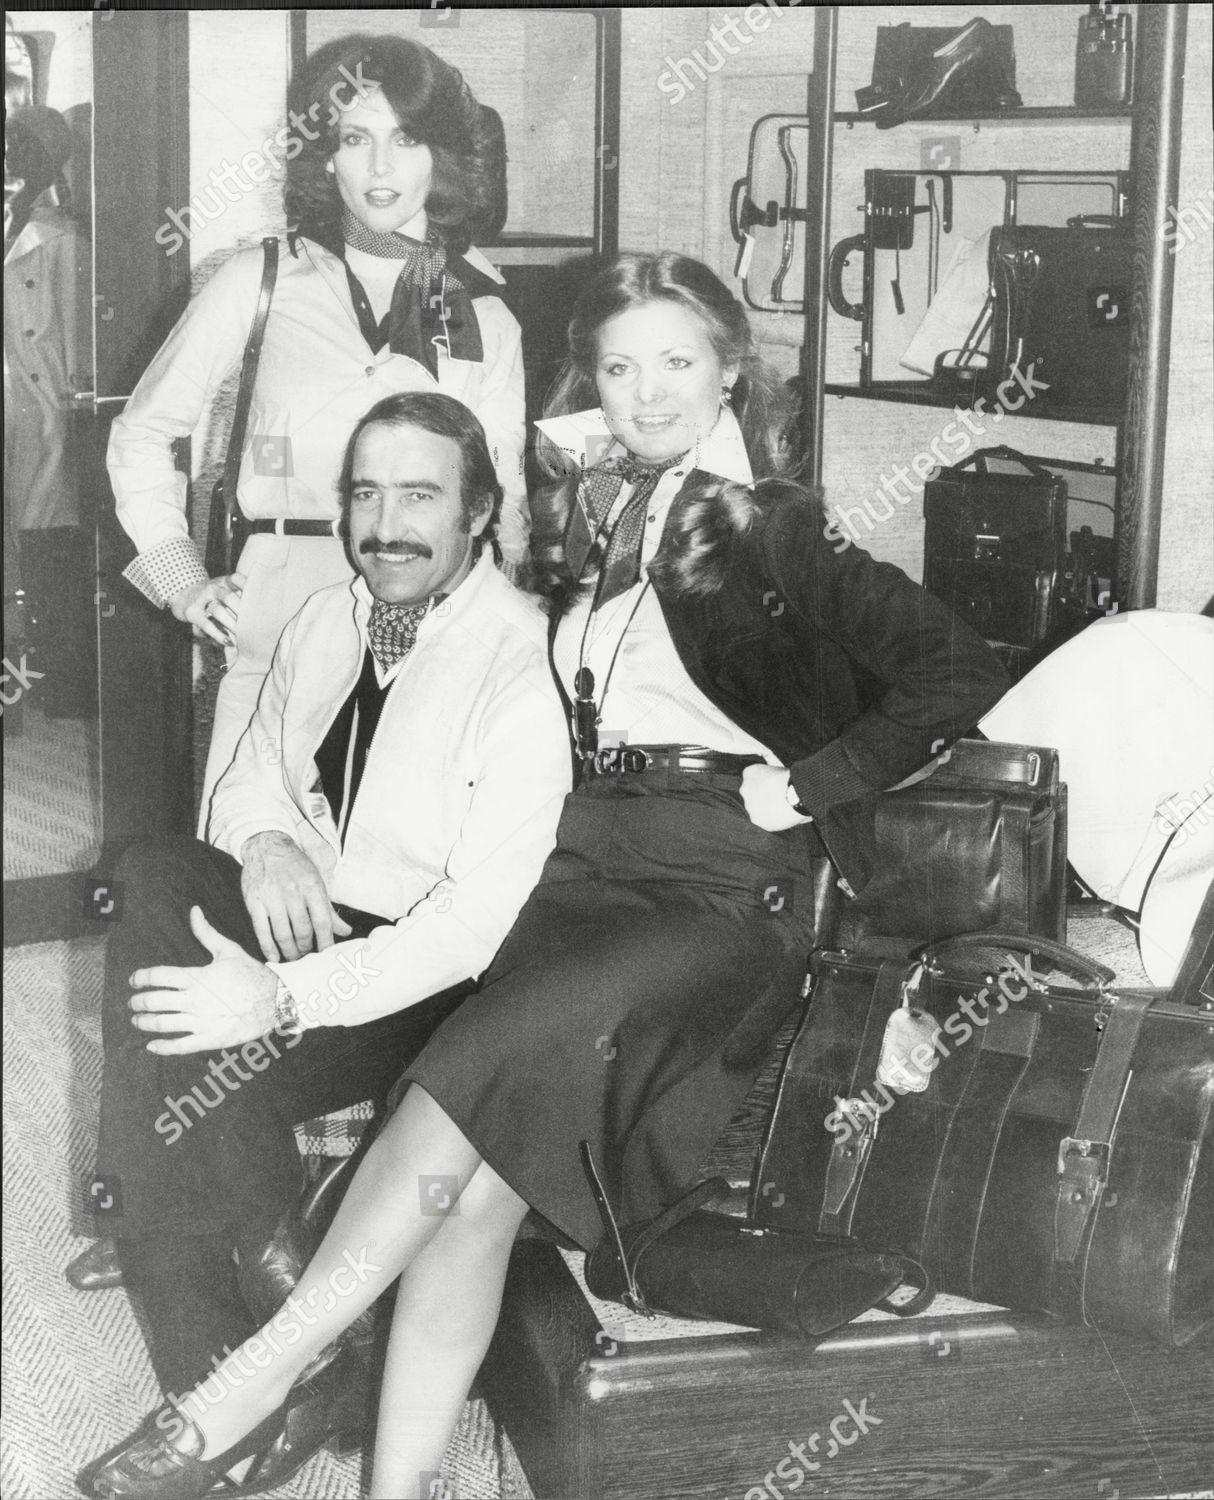 Clay Regazzoni with two girls.